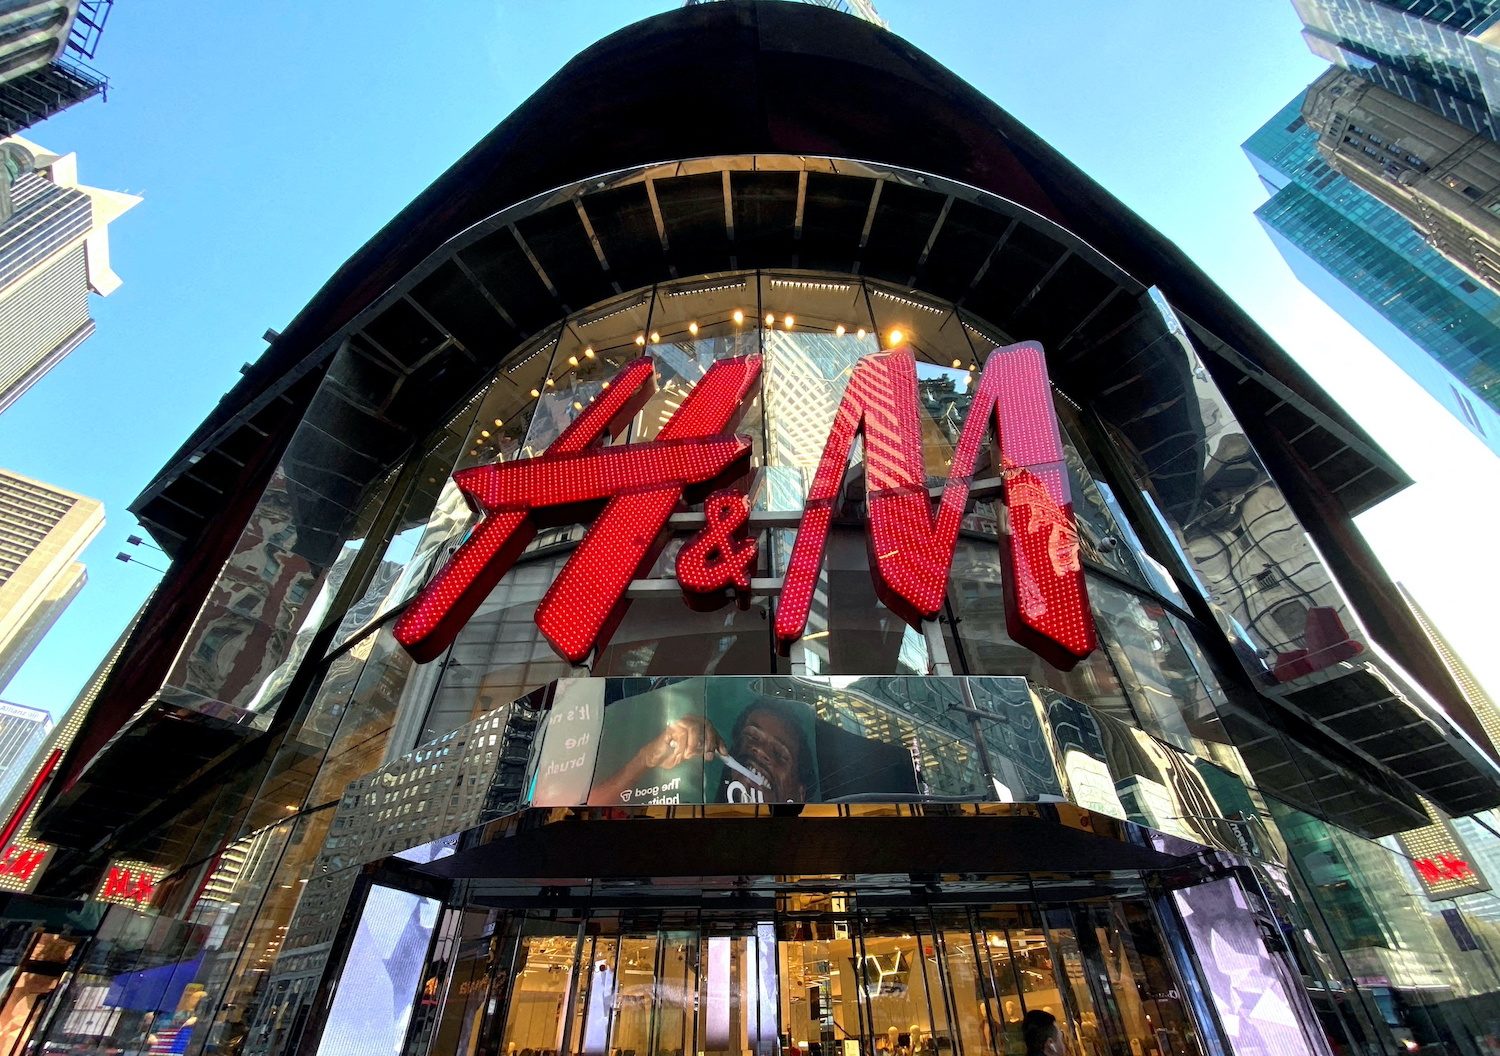 Fashion retailer H&M’s sales jump, but investors fret over margins